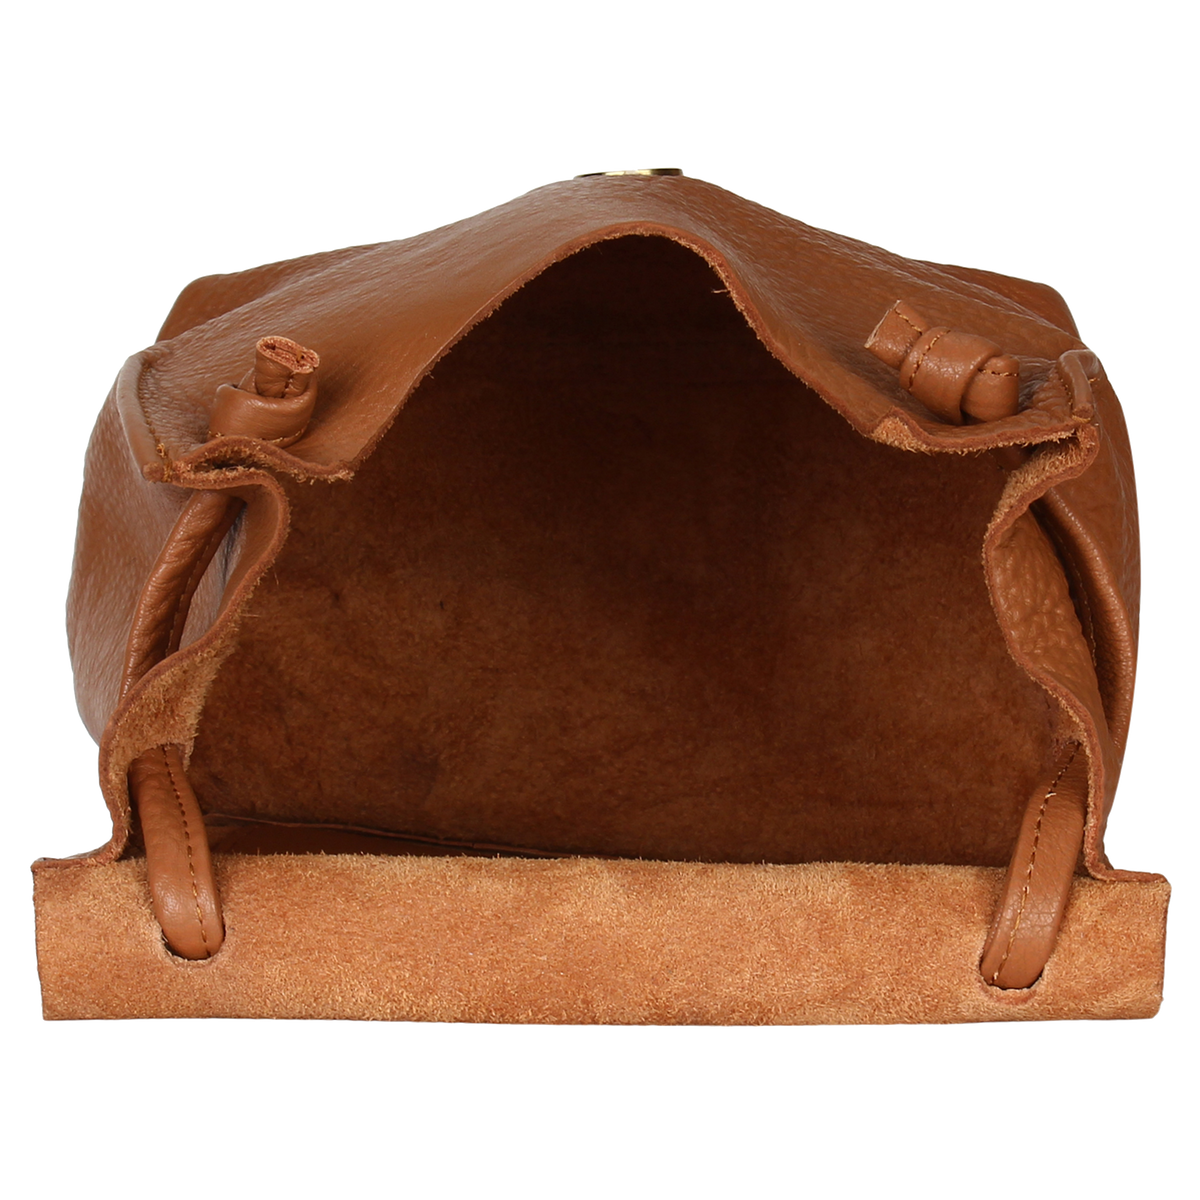 Source Handwoven bohemian western style fringe purse Boho tote bag Brown  soft leather fringe purse Handbag with tassels fringe on m.